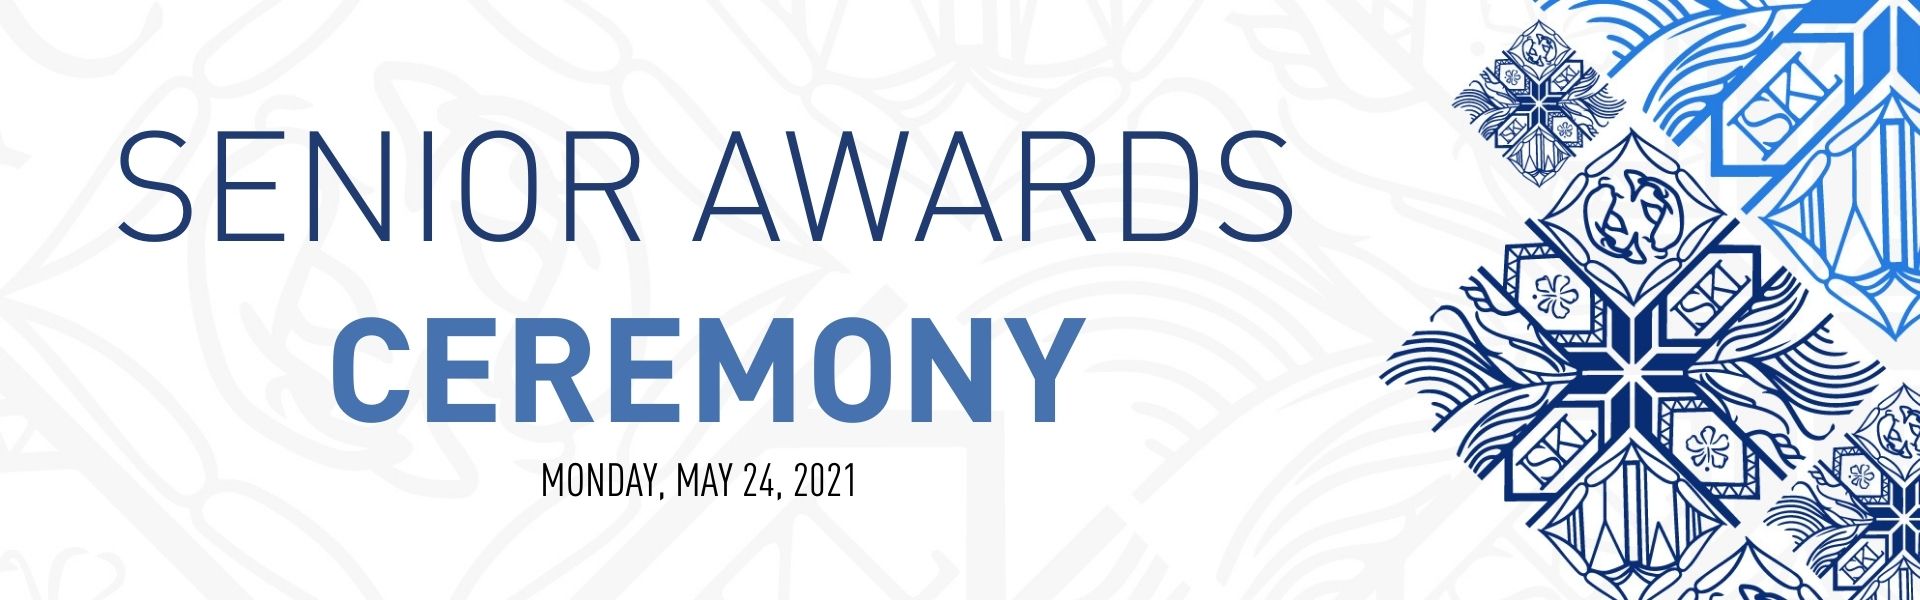 Senior Awards Ceremony Header